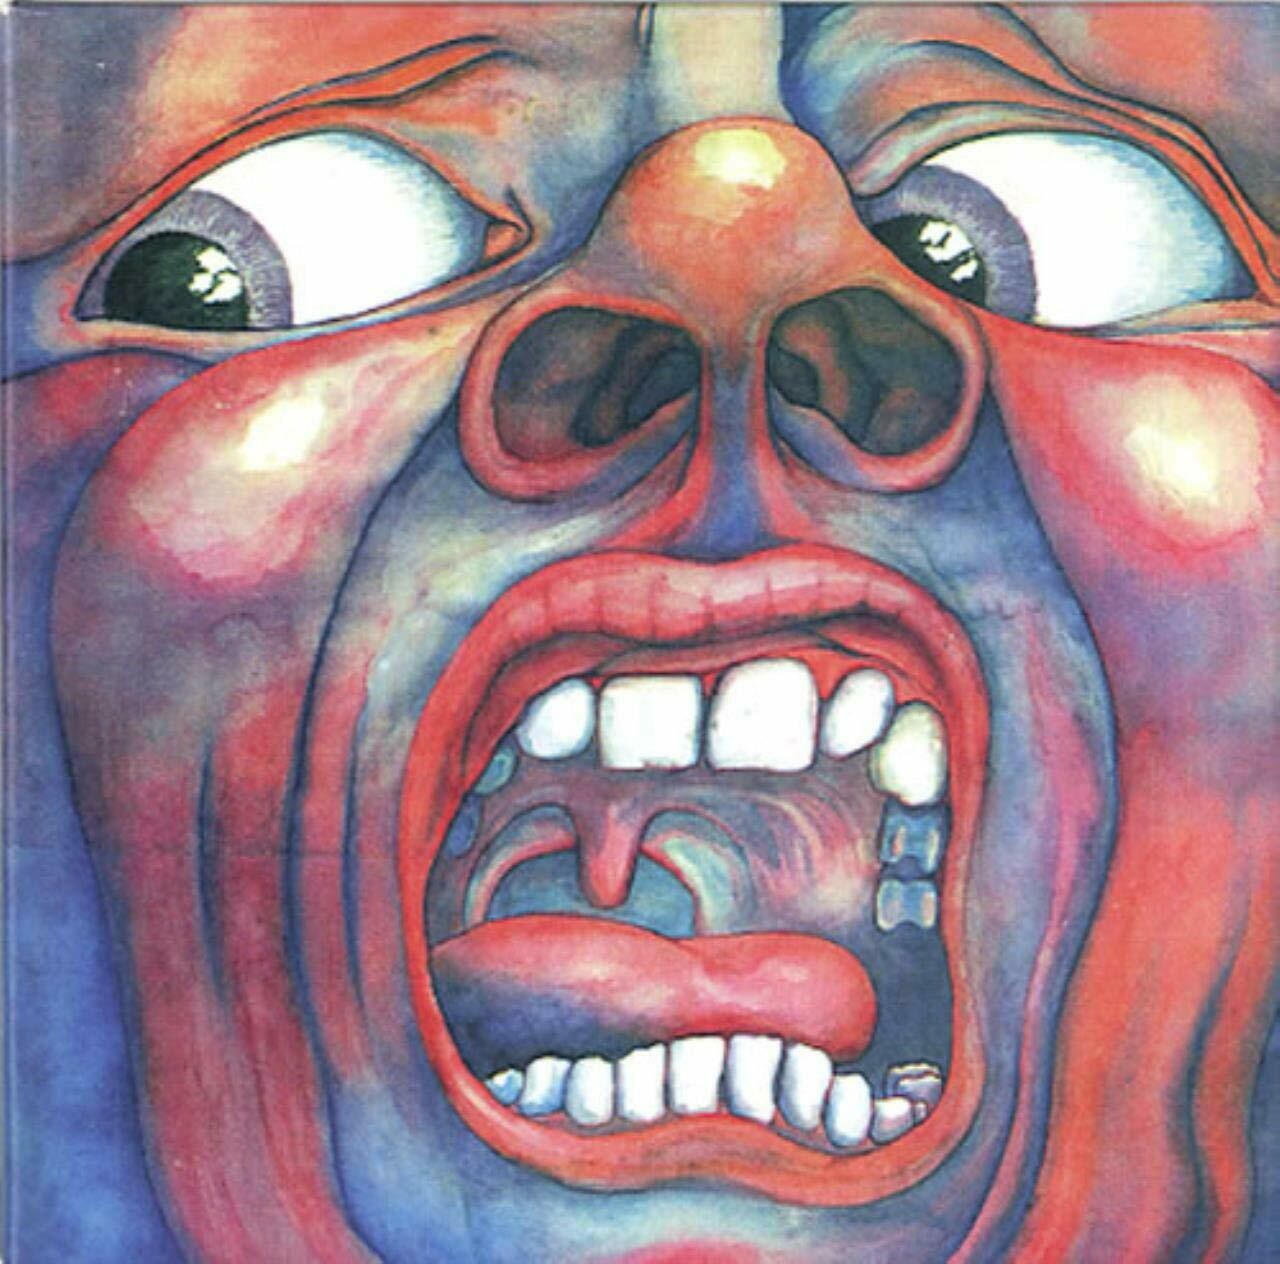 King Crimson "In The Court Of The Crimson King" *200g*